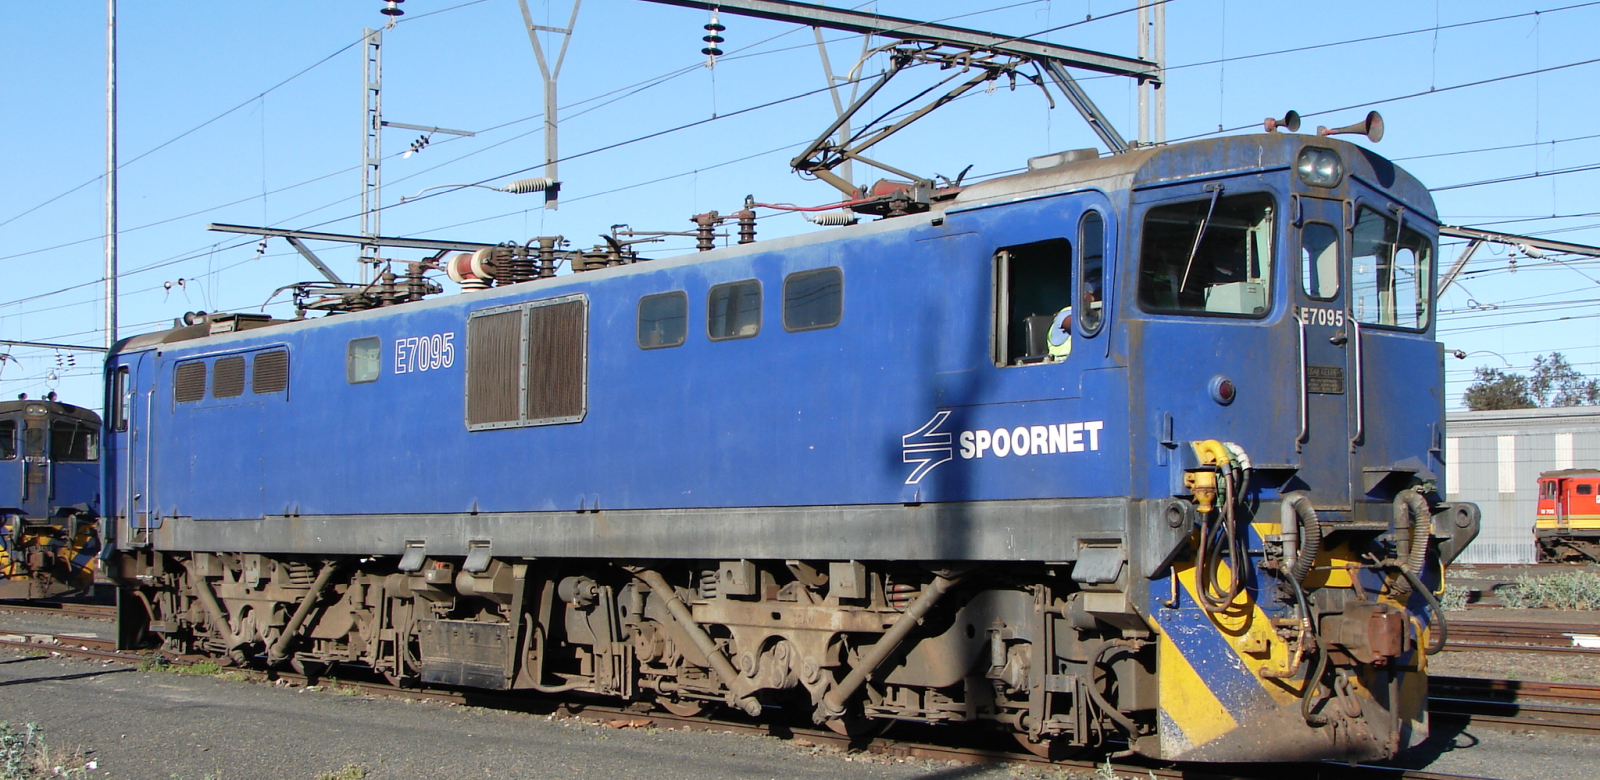 Spoornet E7095 in October 2015 at Beaufort West